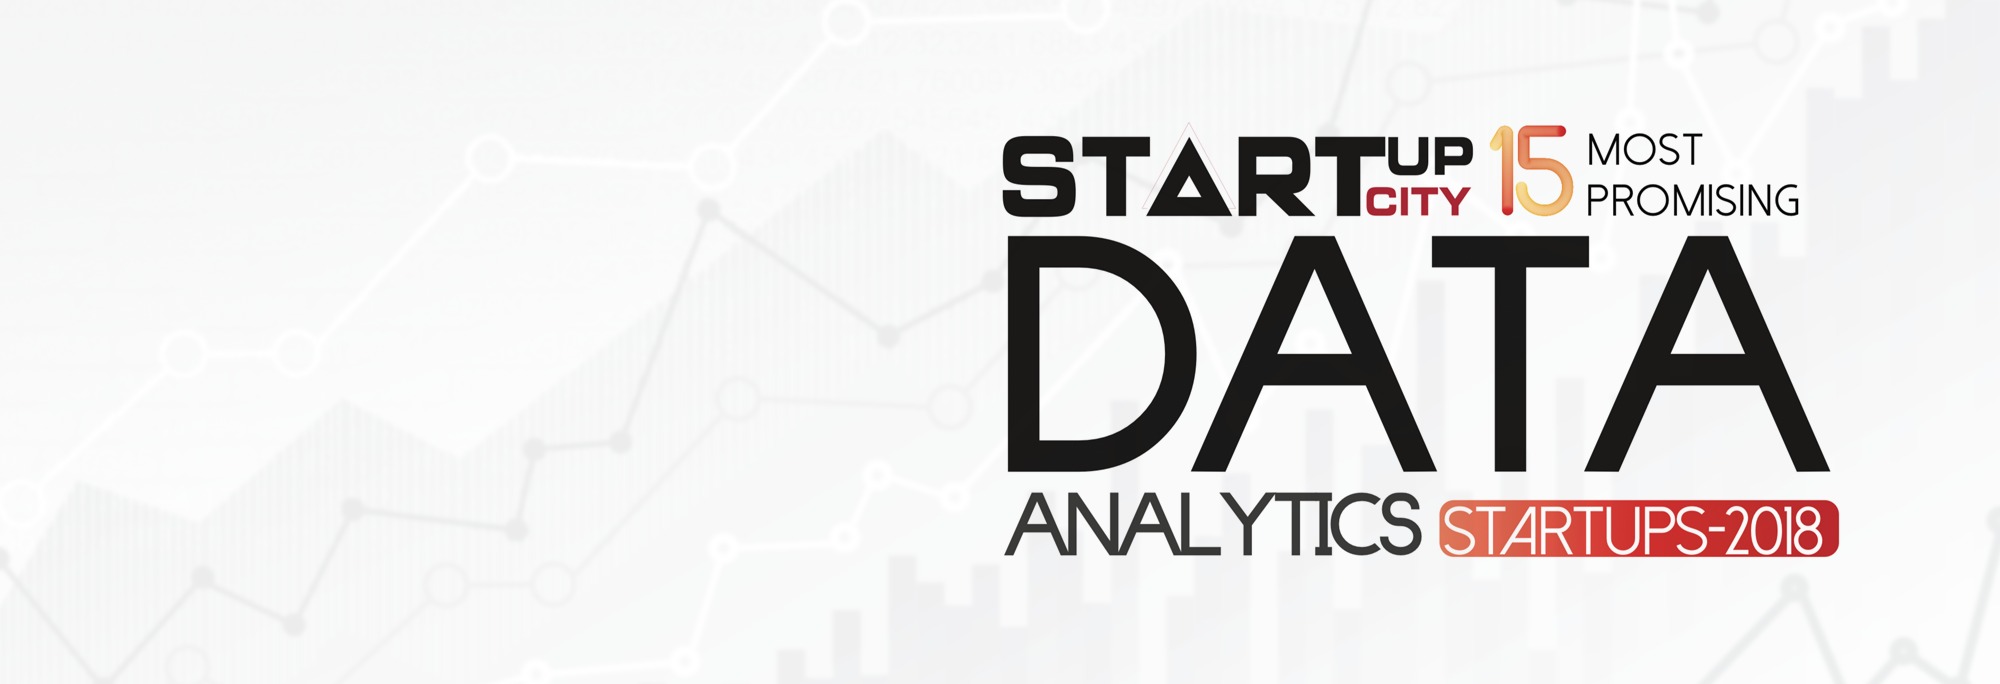 Most Promising Data Analytics Startup in 2018 - Dataflix